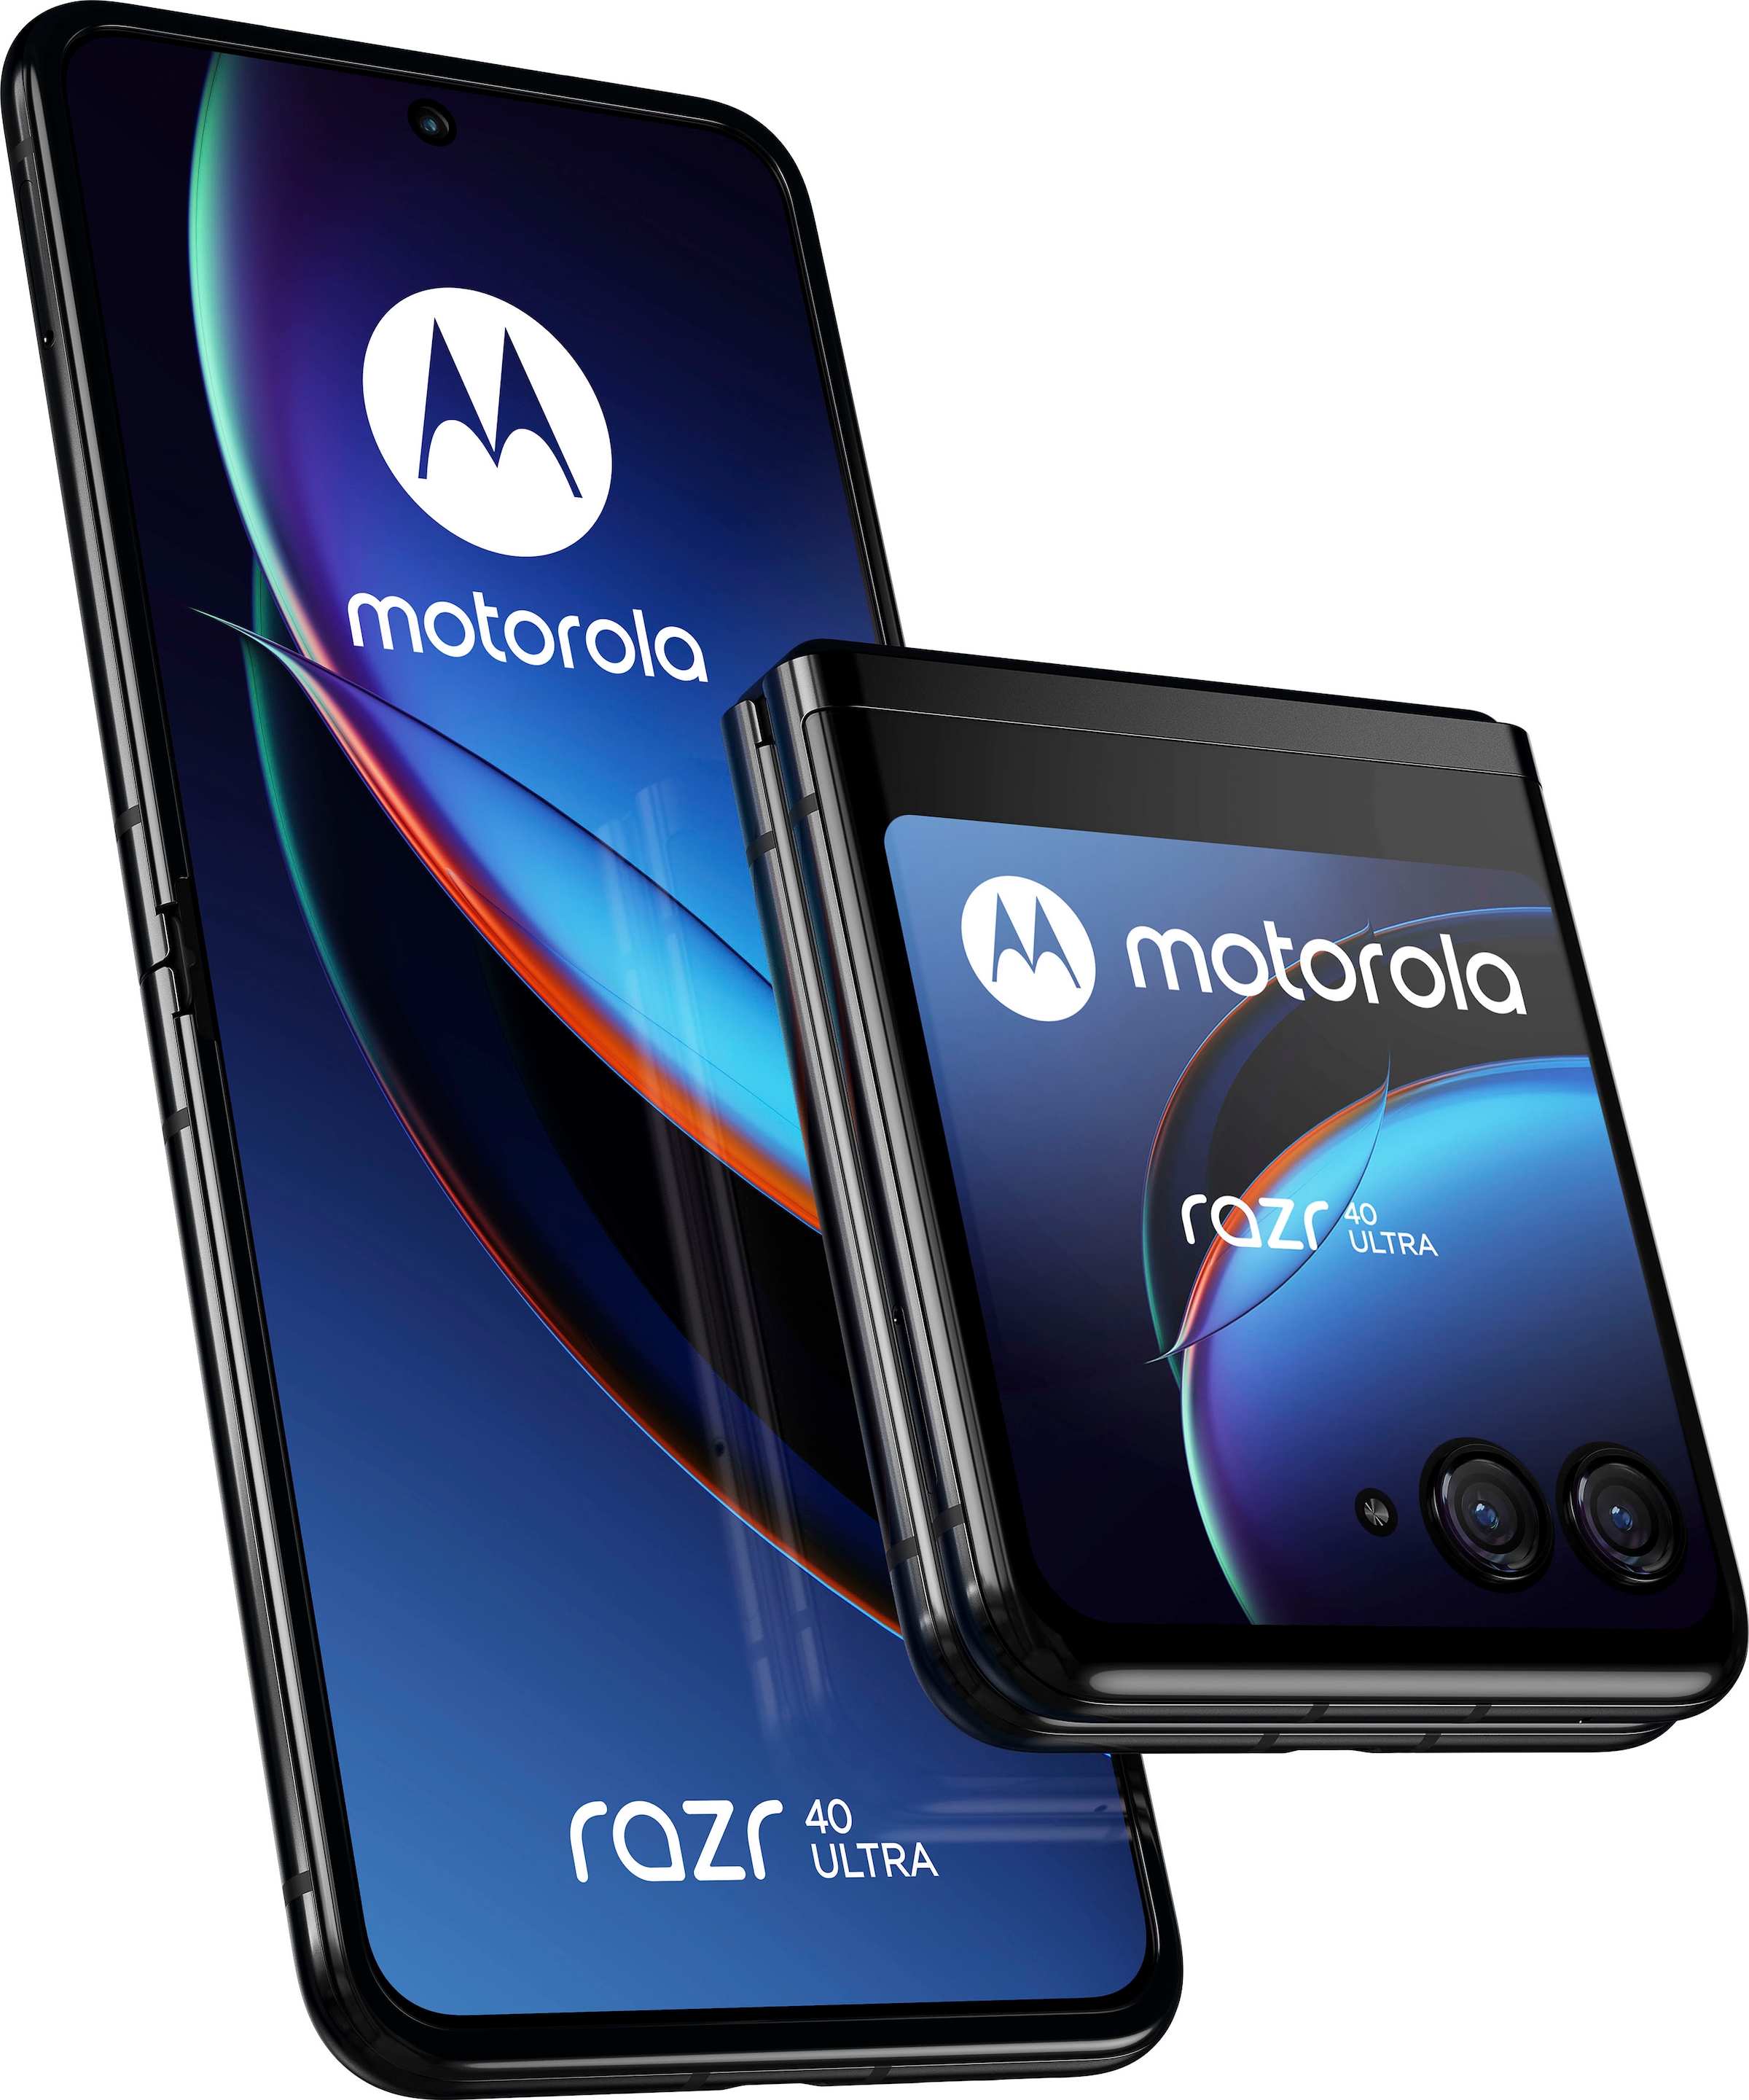 12 »Motorola Speicherplatz, ultra«, | razr40 MP Kamera Blue, GB Smartphone BAUR 17,52 Motorola cm/6,9 256 Zoll, Glacier